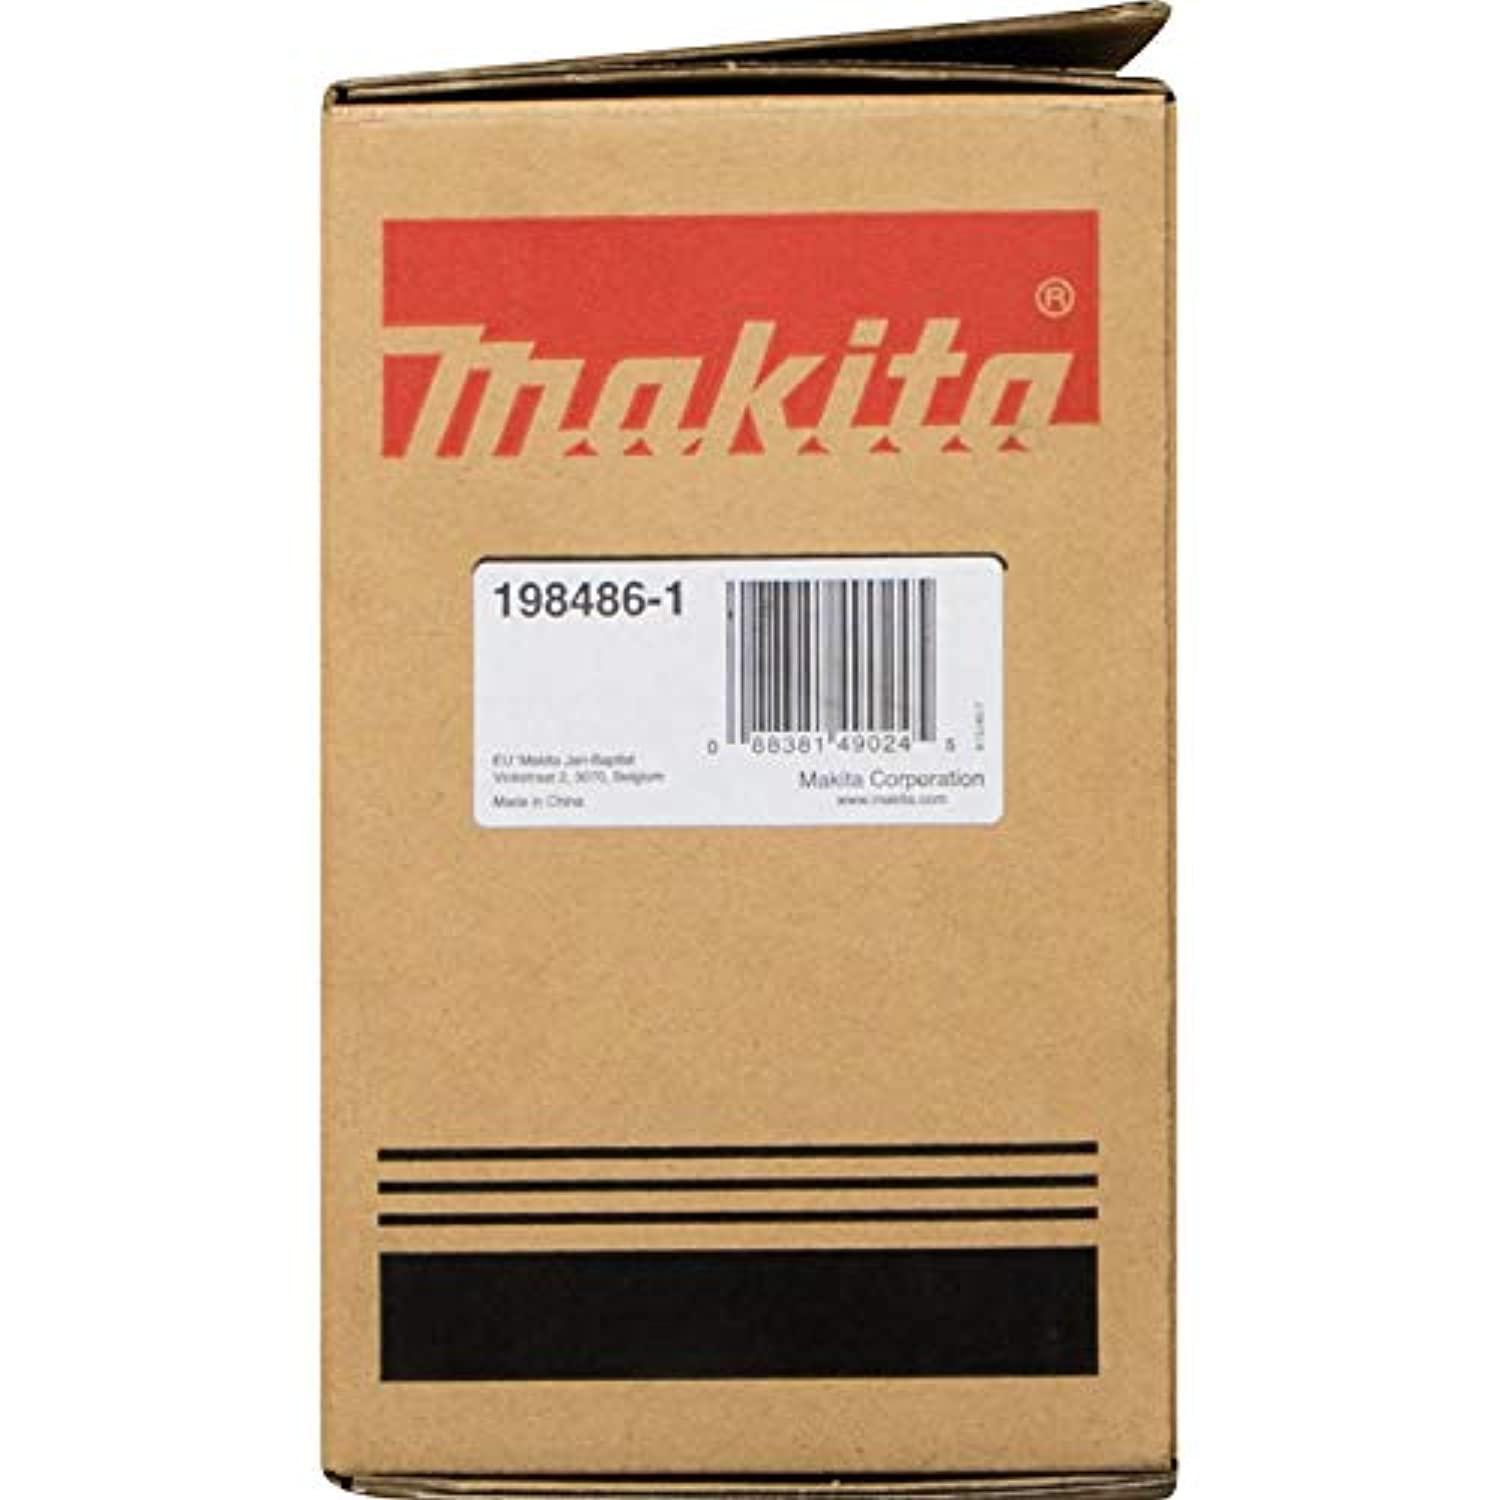 makita 198486-1 long handle attachment